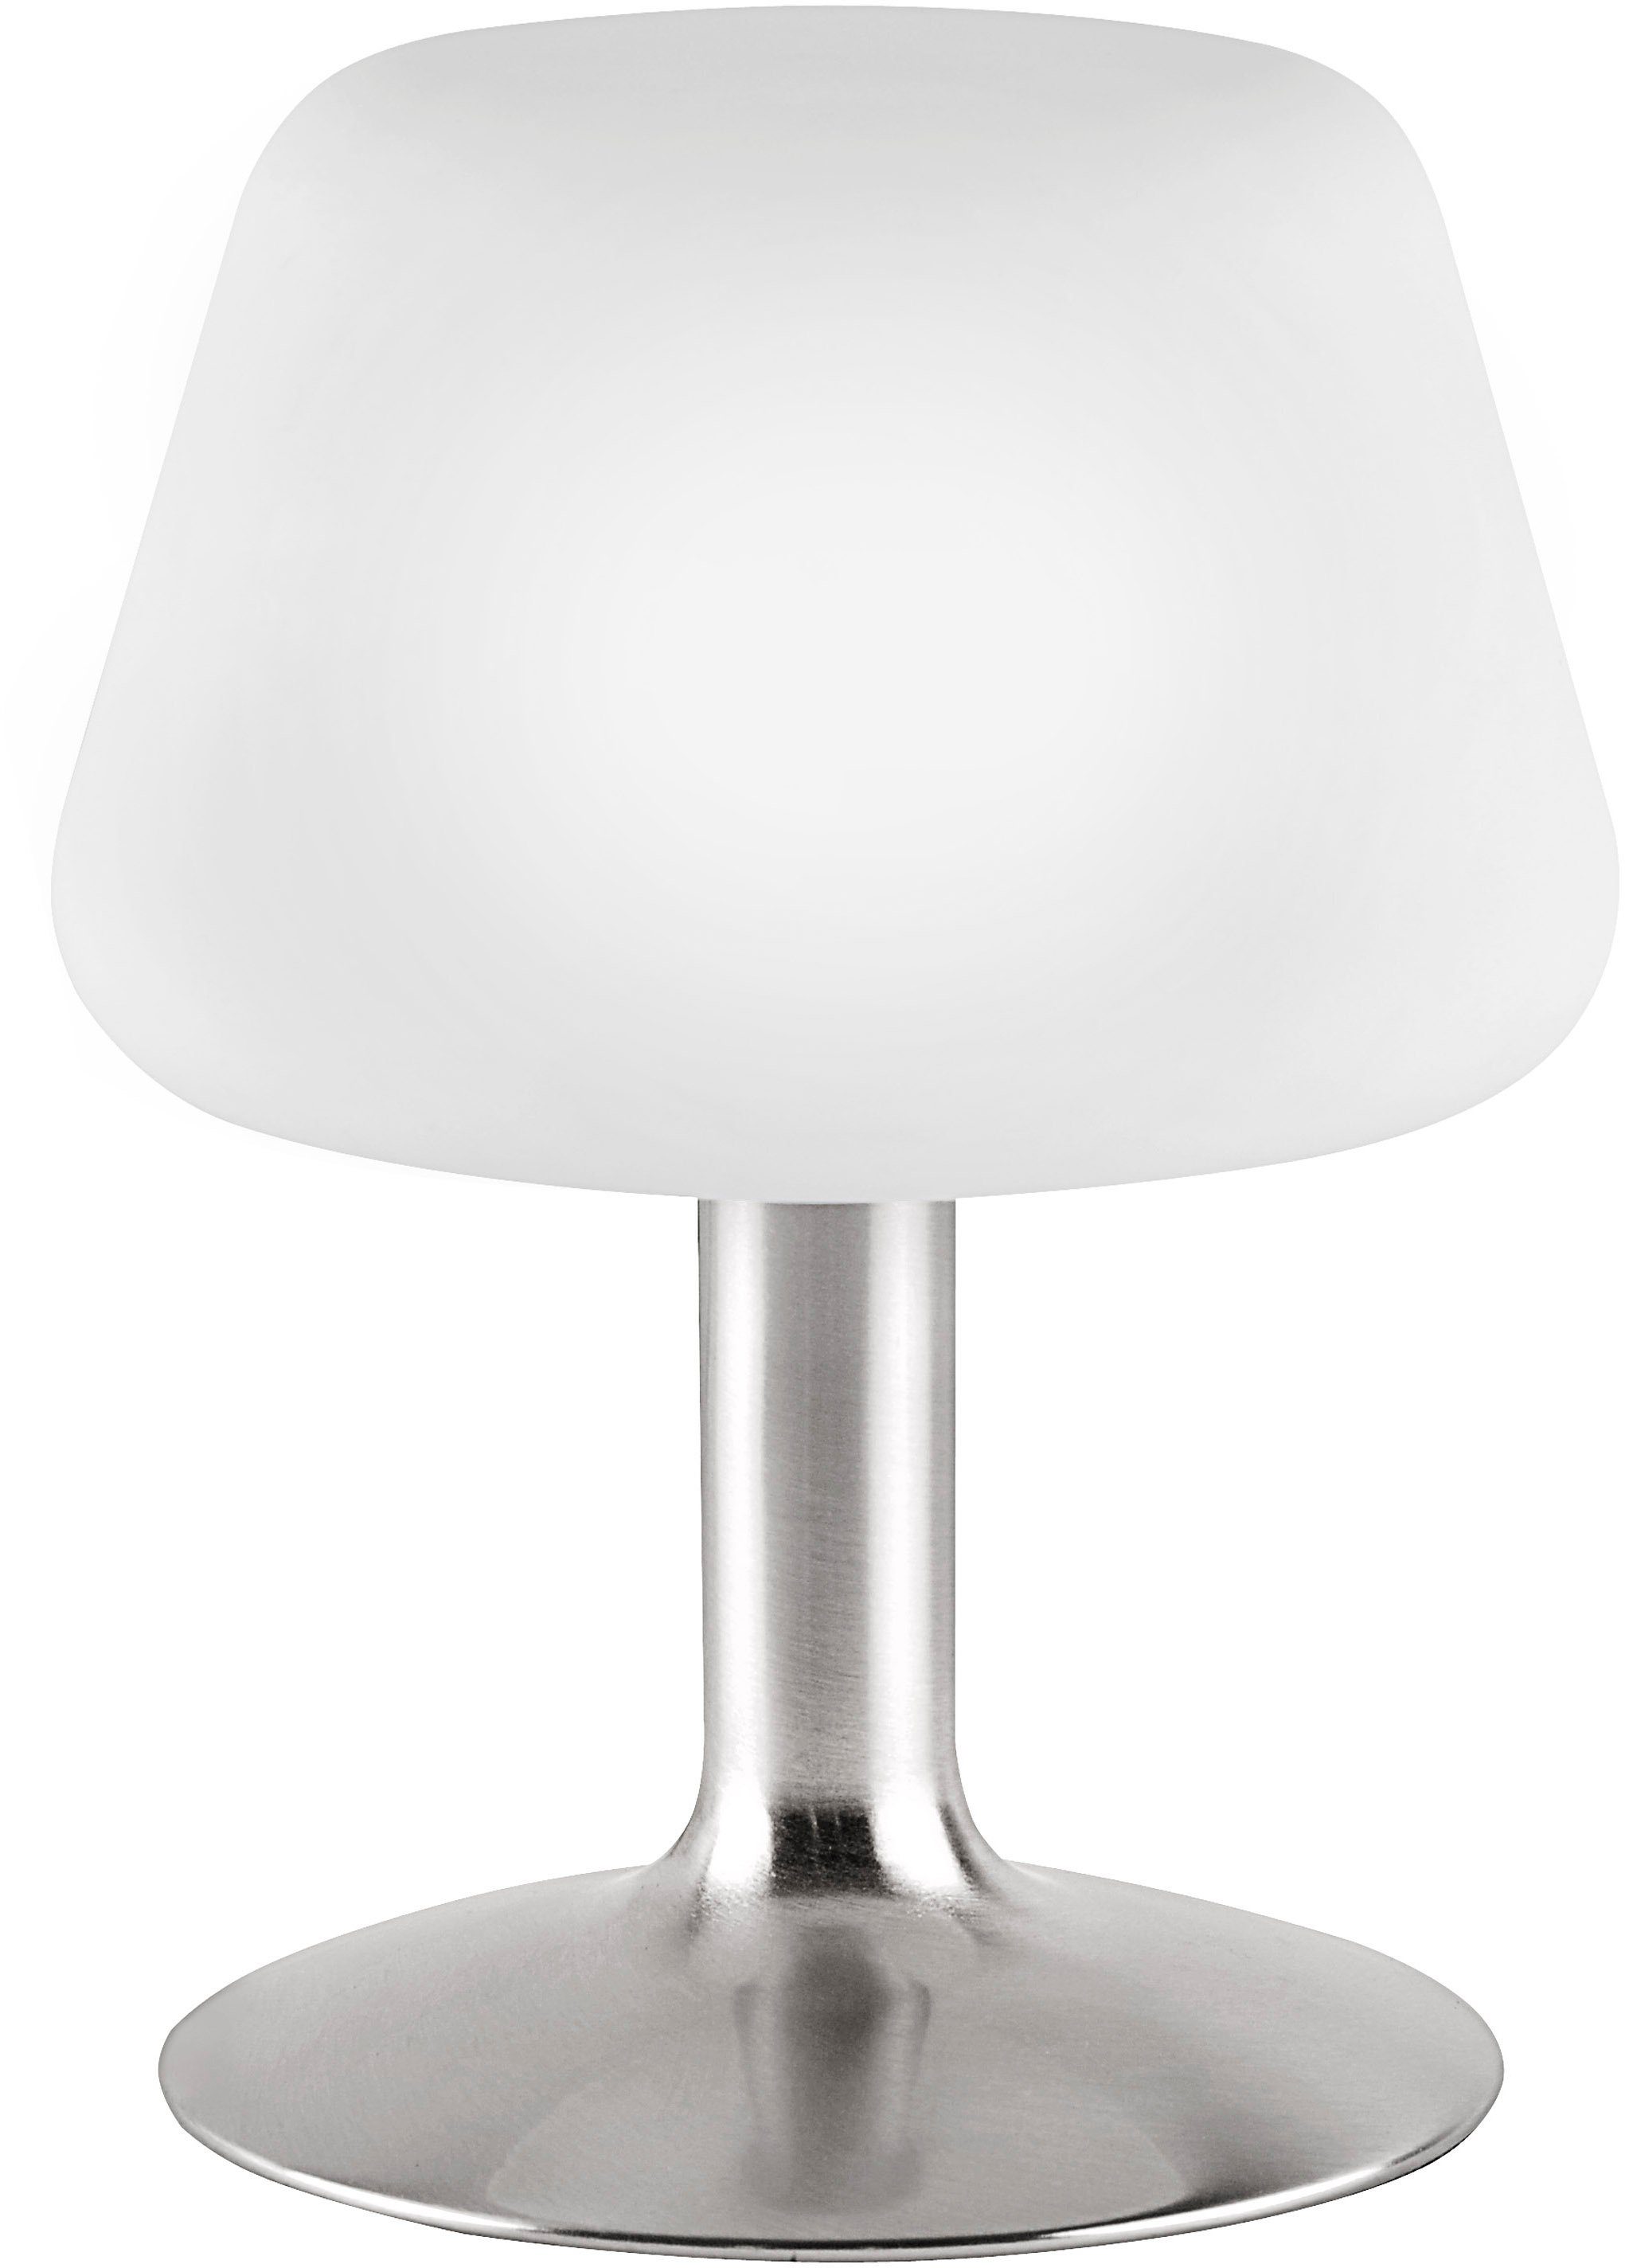 Verkaufskanal Paul Neuhaus LED Tischleuchte Dimmfunktion, Warmweiß, LED 3-Stufen Touchdimmer Till, wechselbar